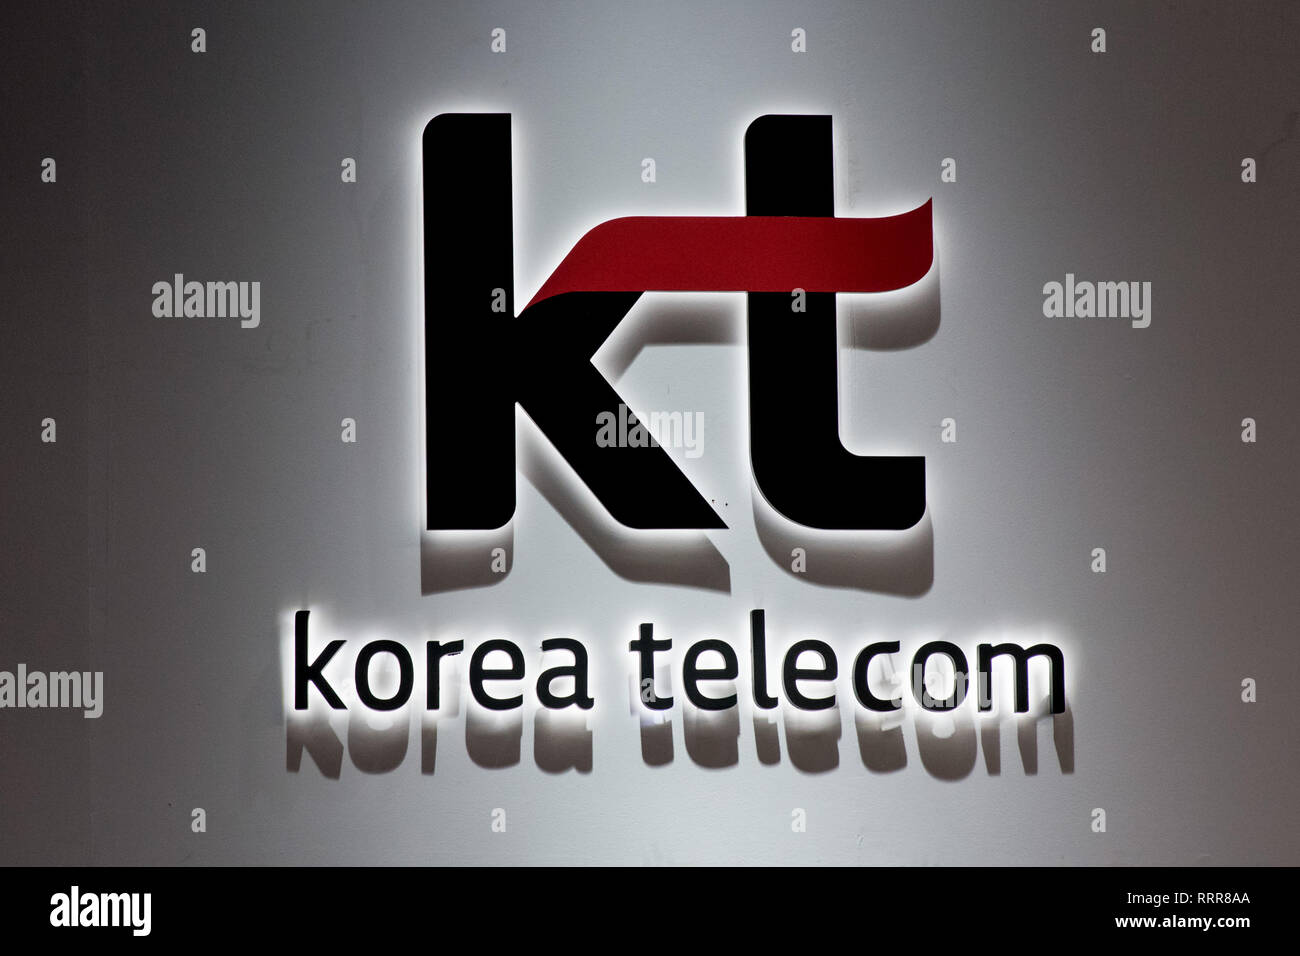 Korea telecom hi-res stock photography and images - Alamy